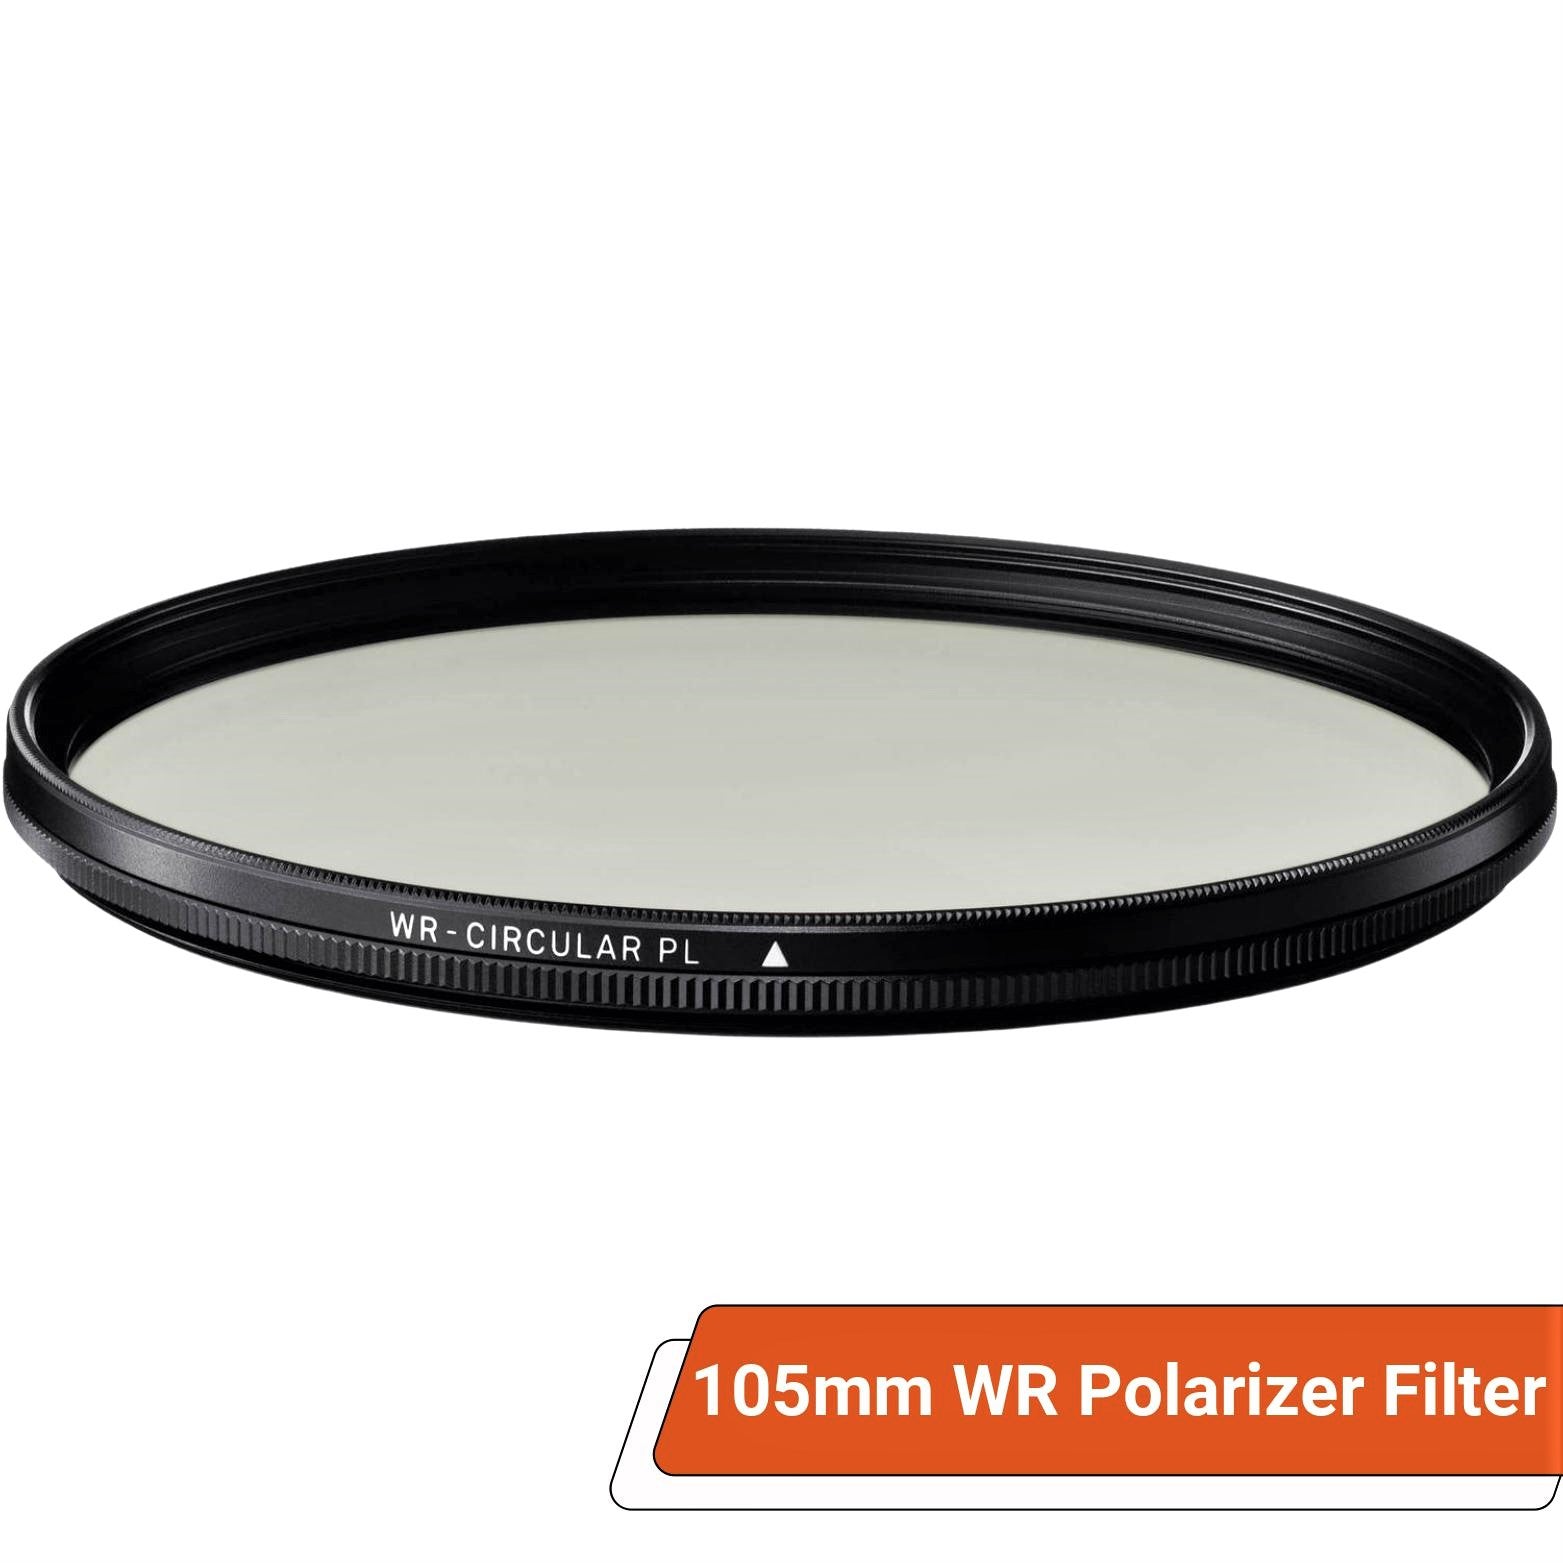 Sigma 105mm WR (Water Repellent) Circular Polarizer Filter